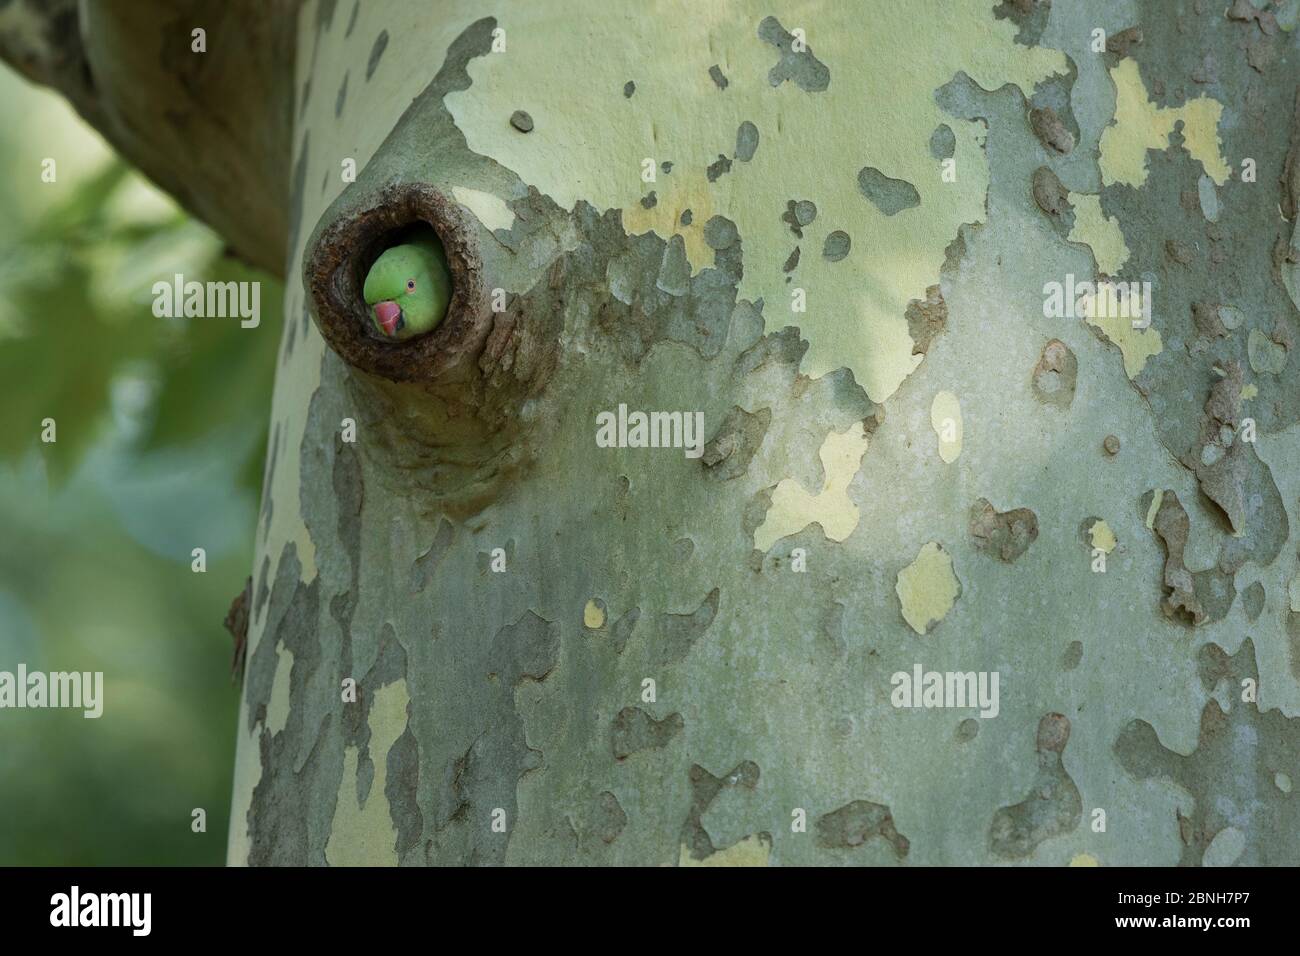 Rose-ringed Parakeet  (Psittacula krameri) introduced species, at nest in tree, Paris region, France, August Stock Photo